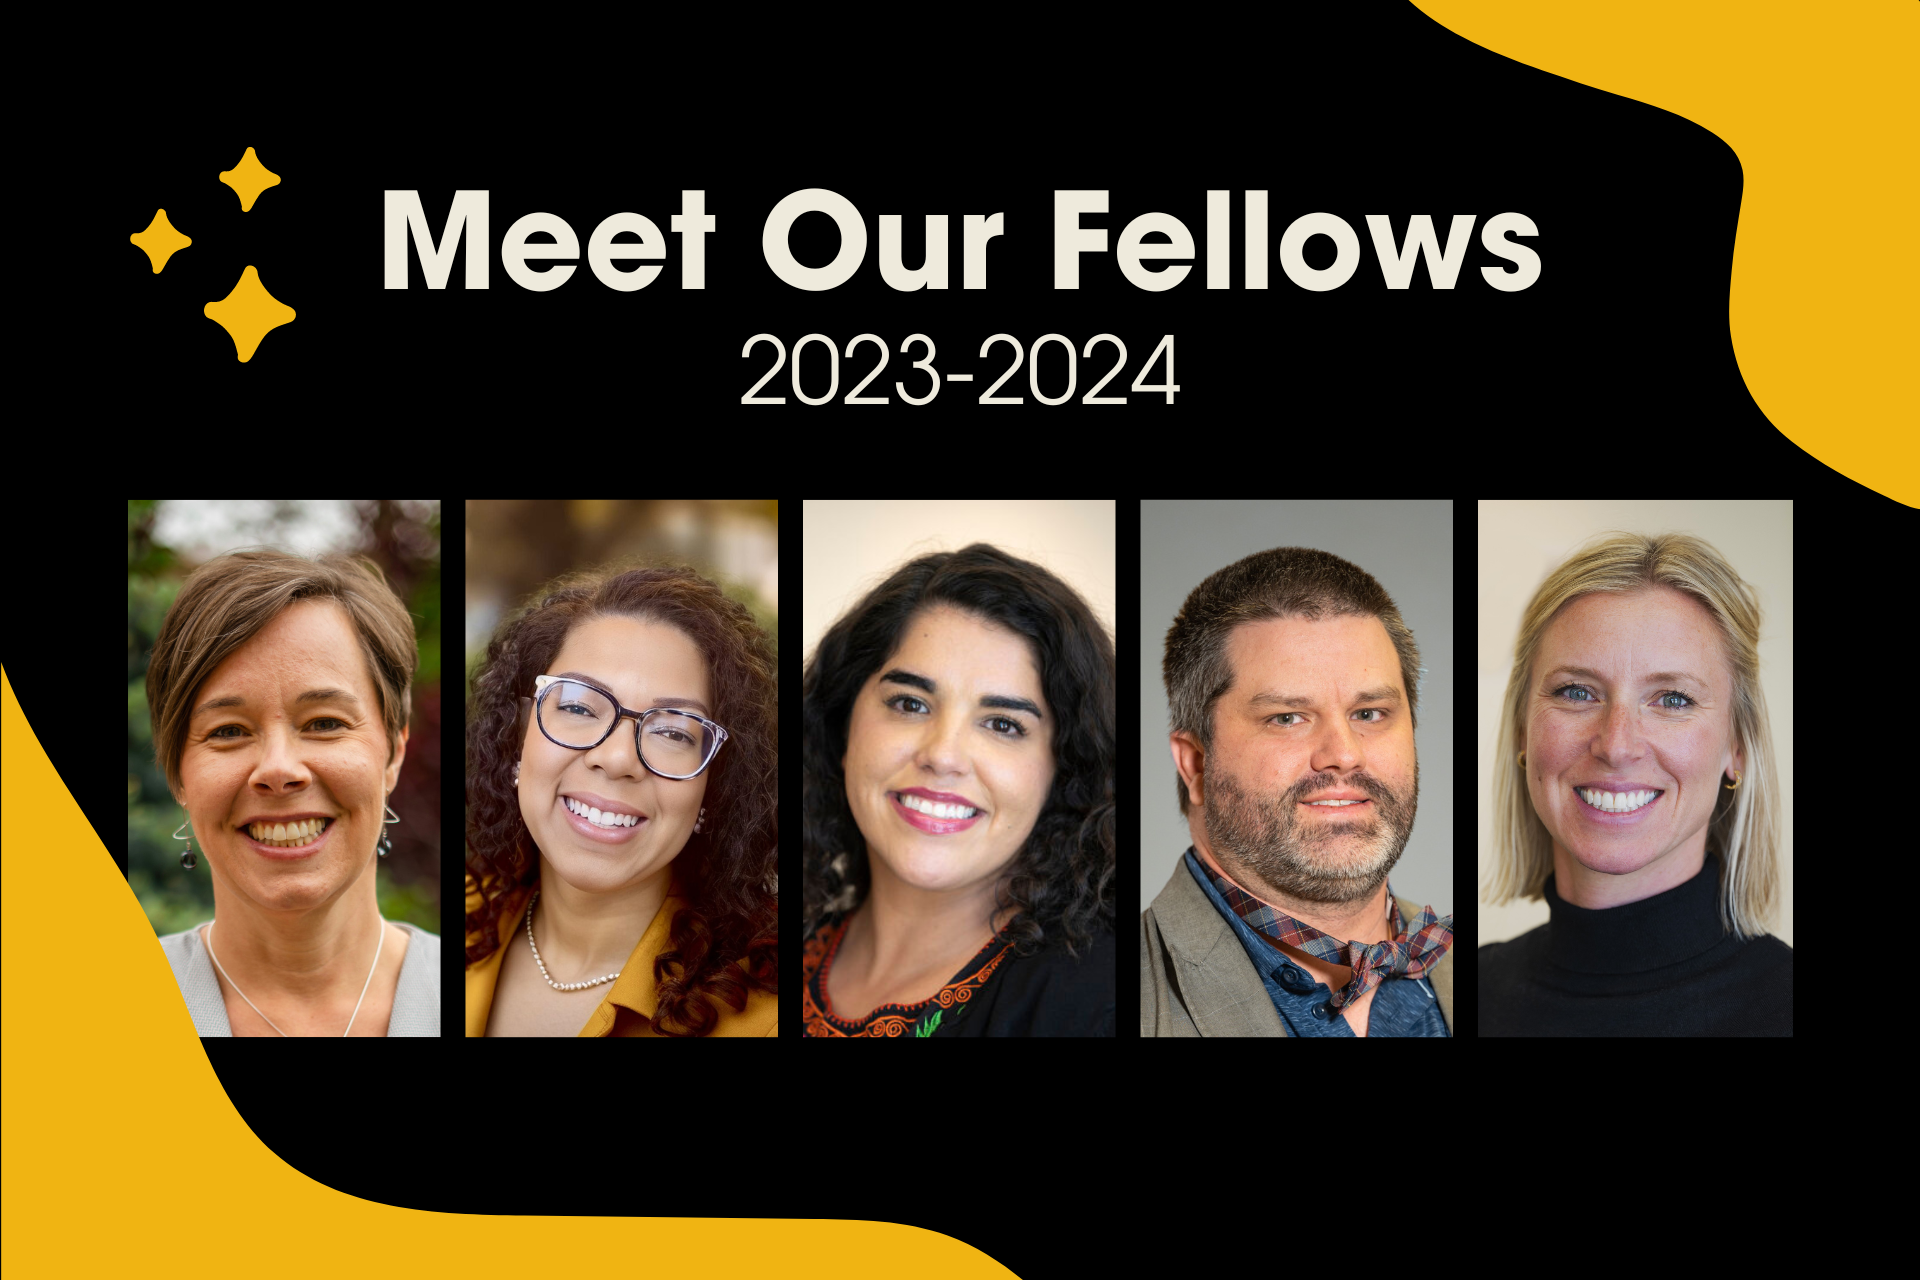 Introducing the 2023-2024 fellowships program participants.